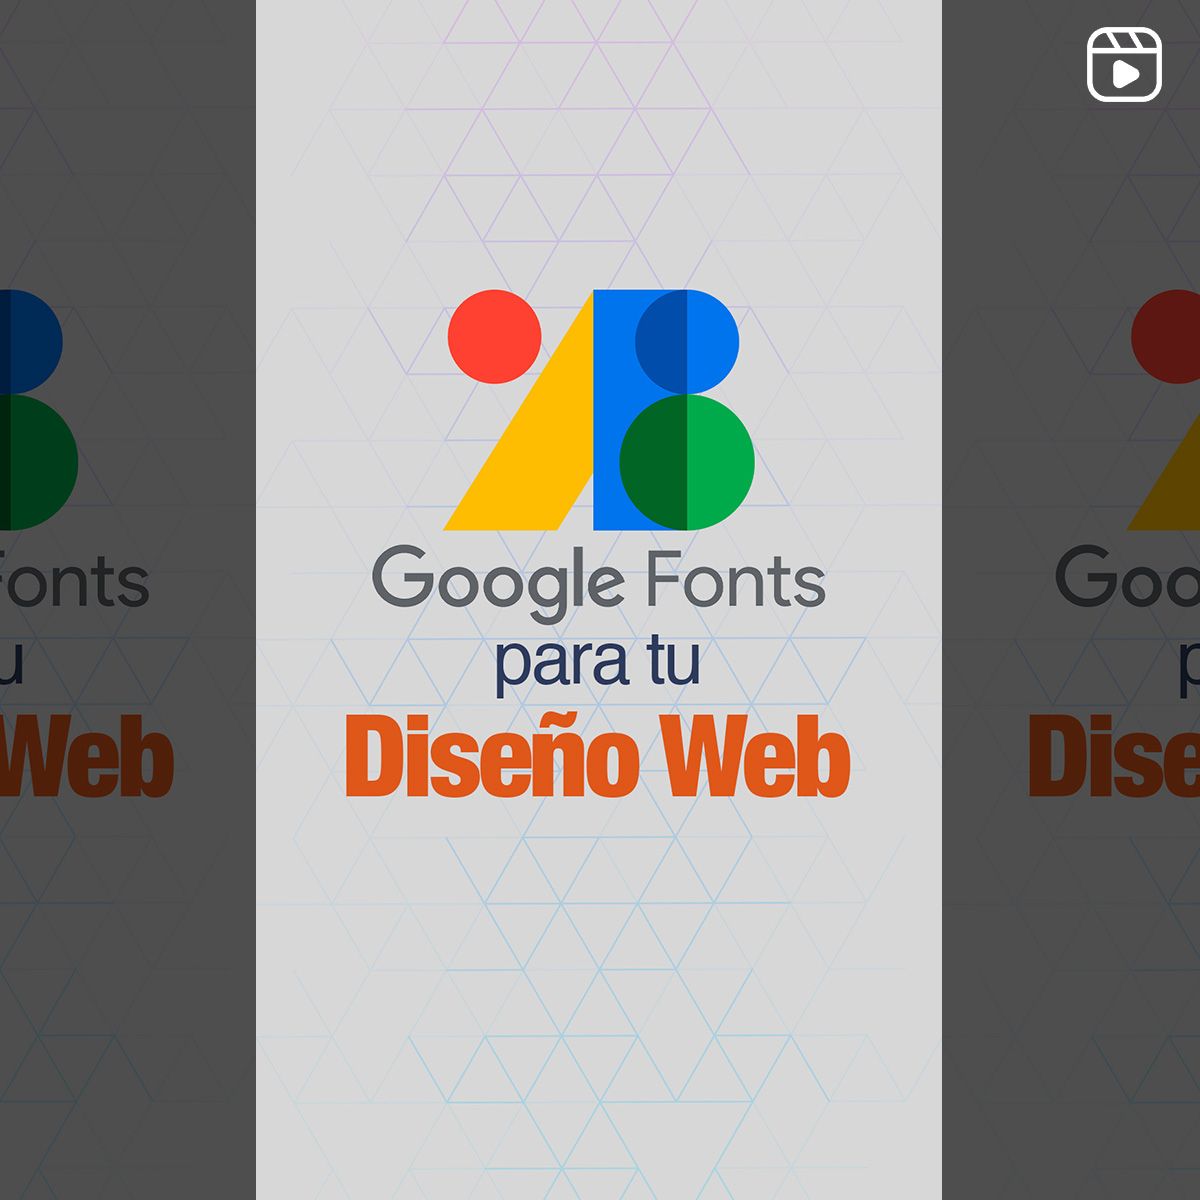 Google Fonts para tu Diseño Web